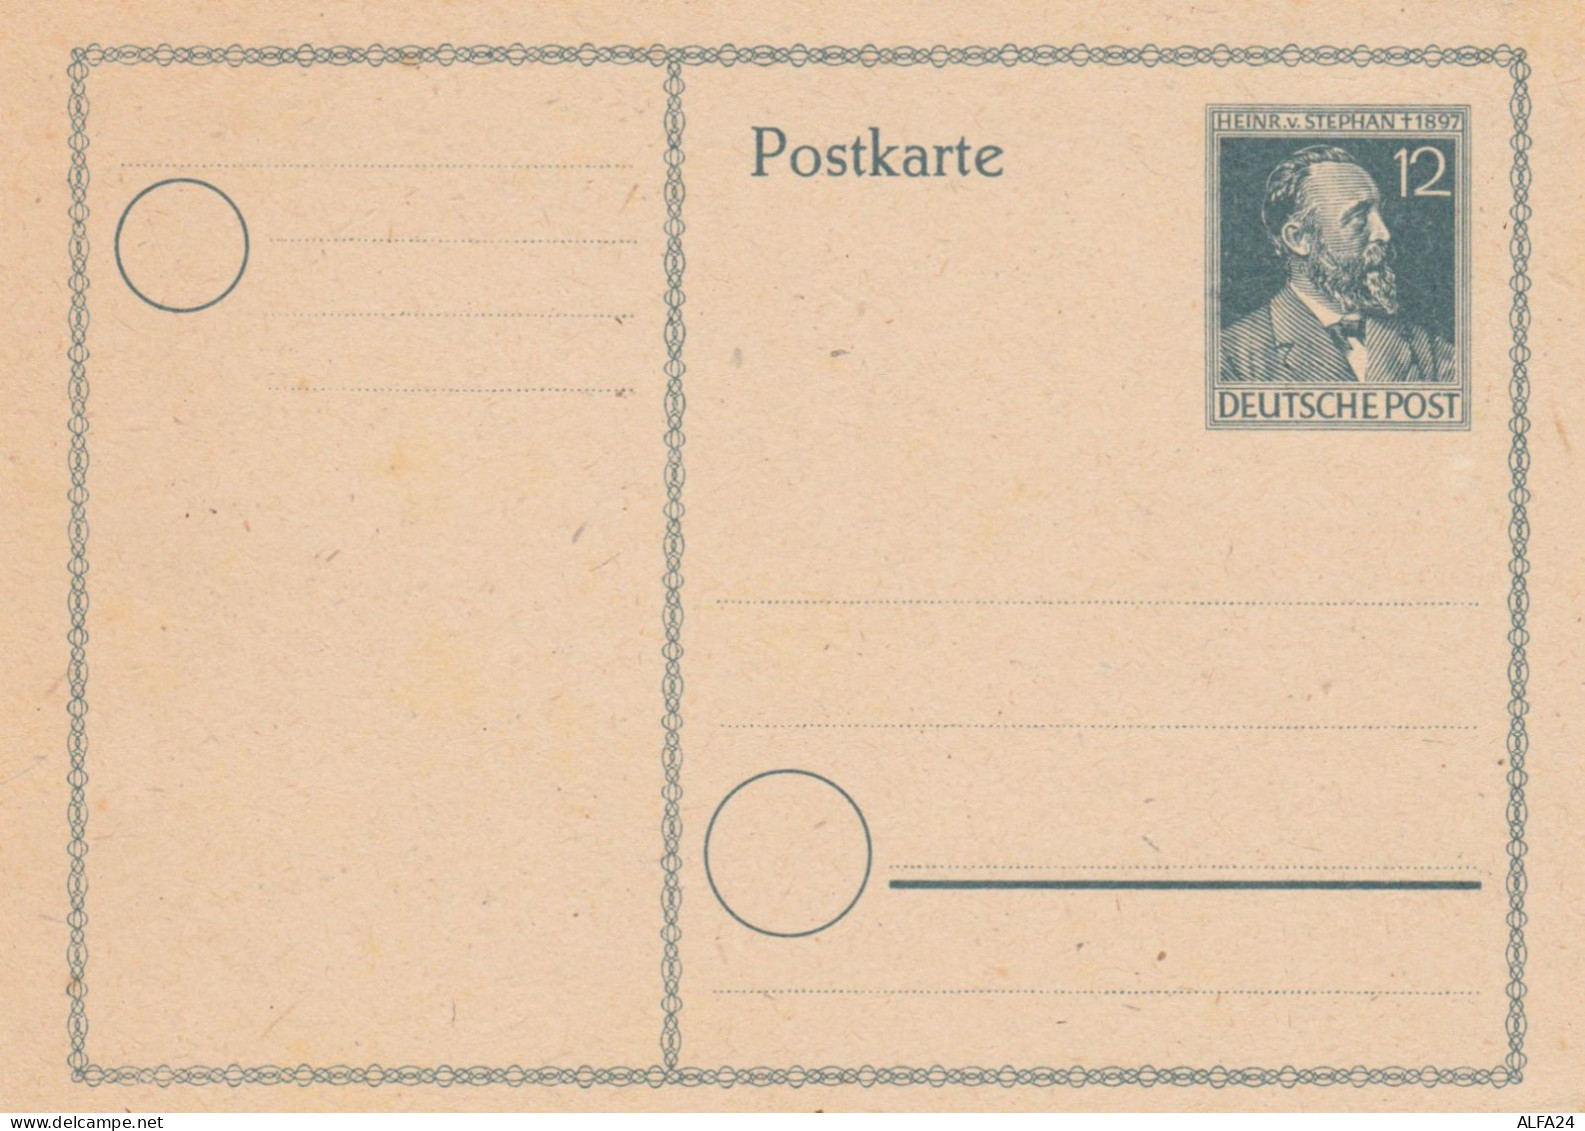 INTERO POSTALE 1948 HEINR STEPHAN NUOVO 12 PF GERMANIA (KP588 - Postkarten - Ungebraucht